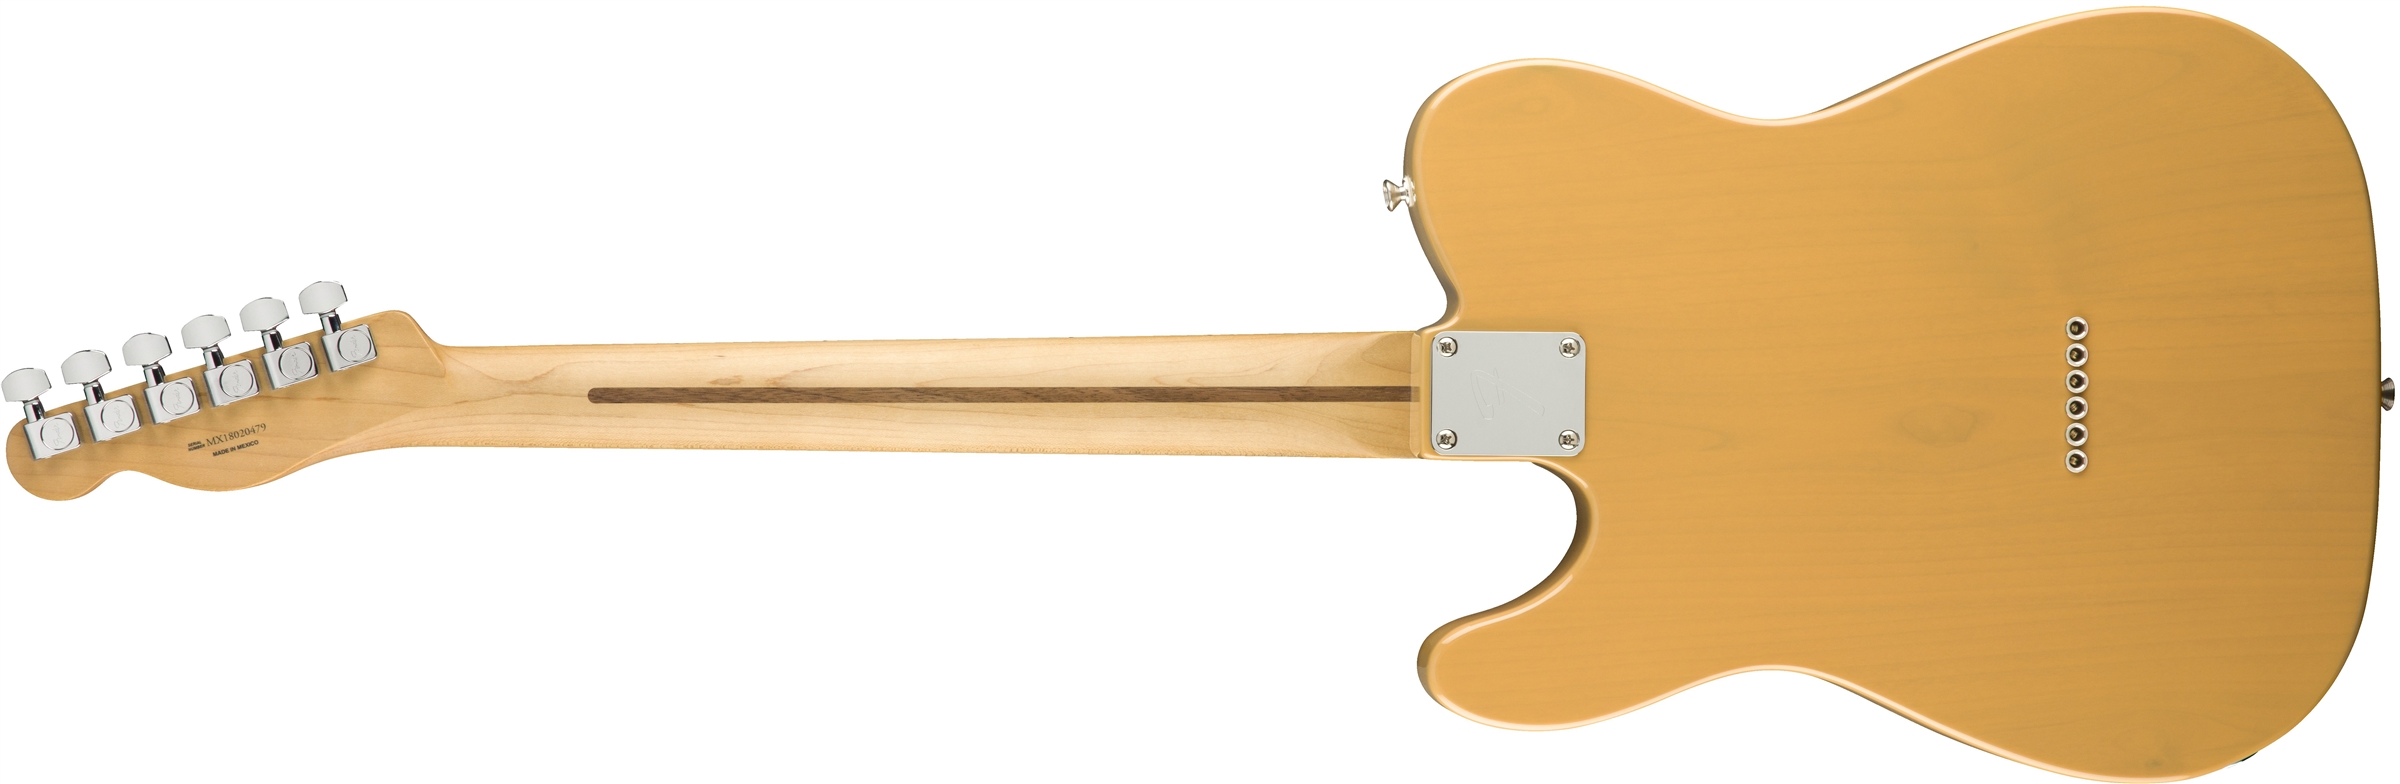 Fender Tele Player Mex Mn - Butterscotch Blonde - Tel shape electric guitar - Variation 2